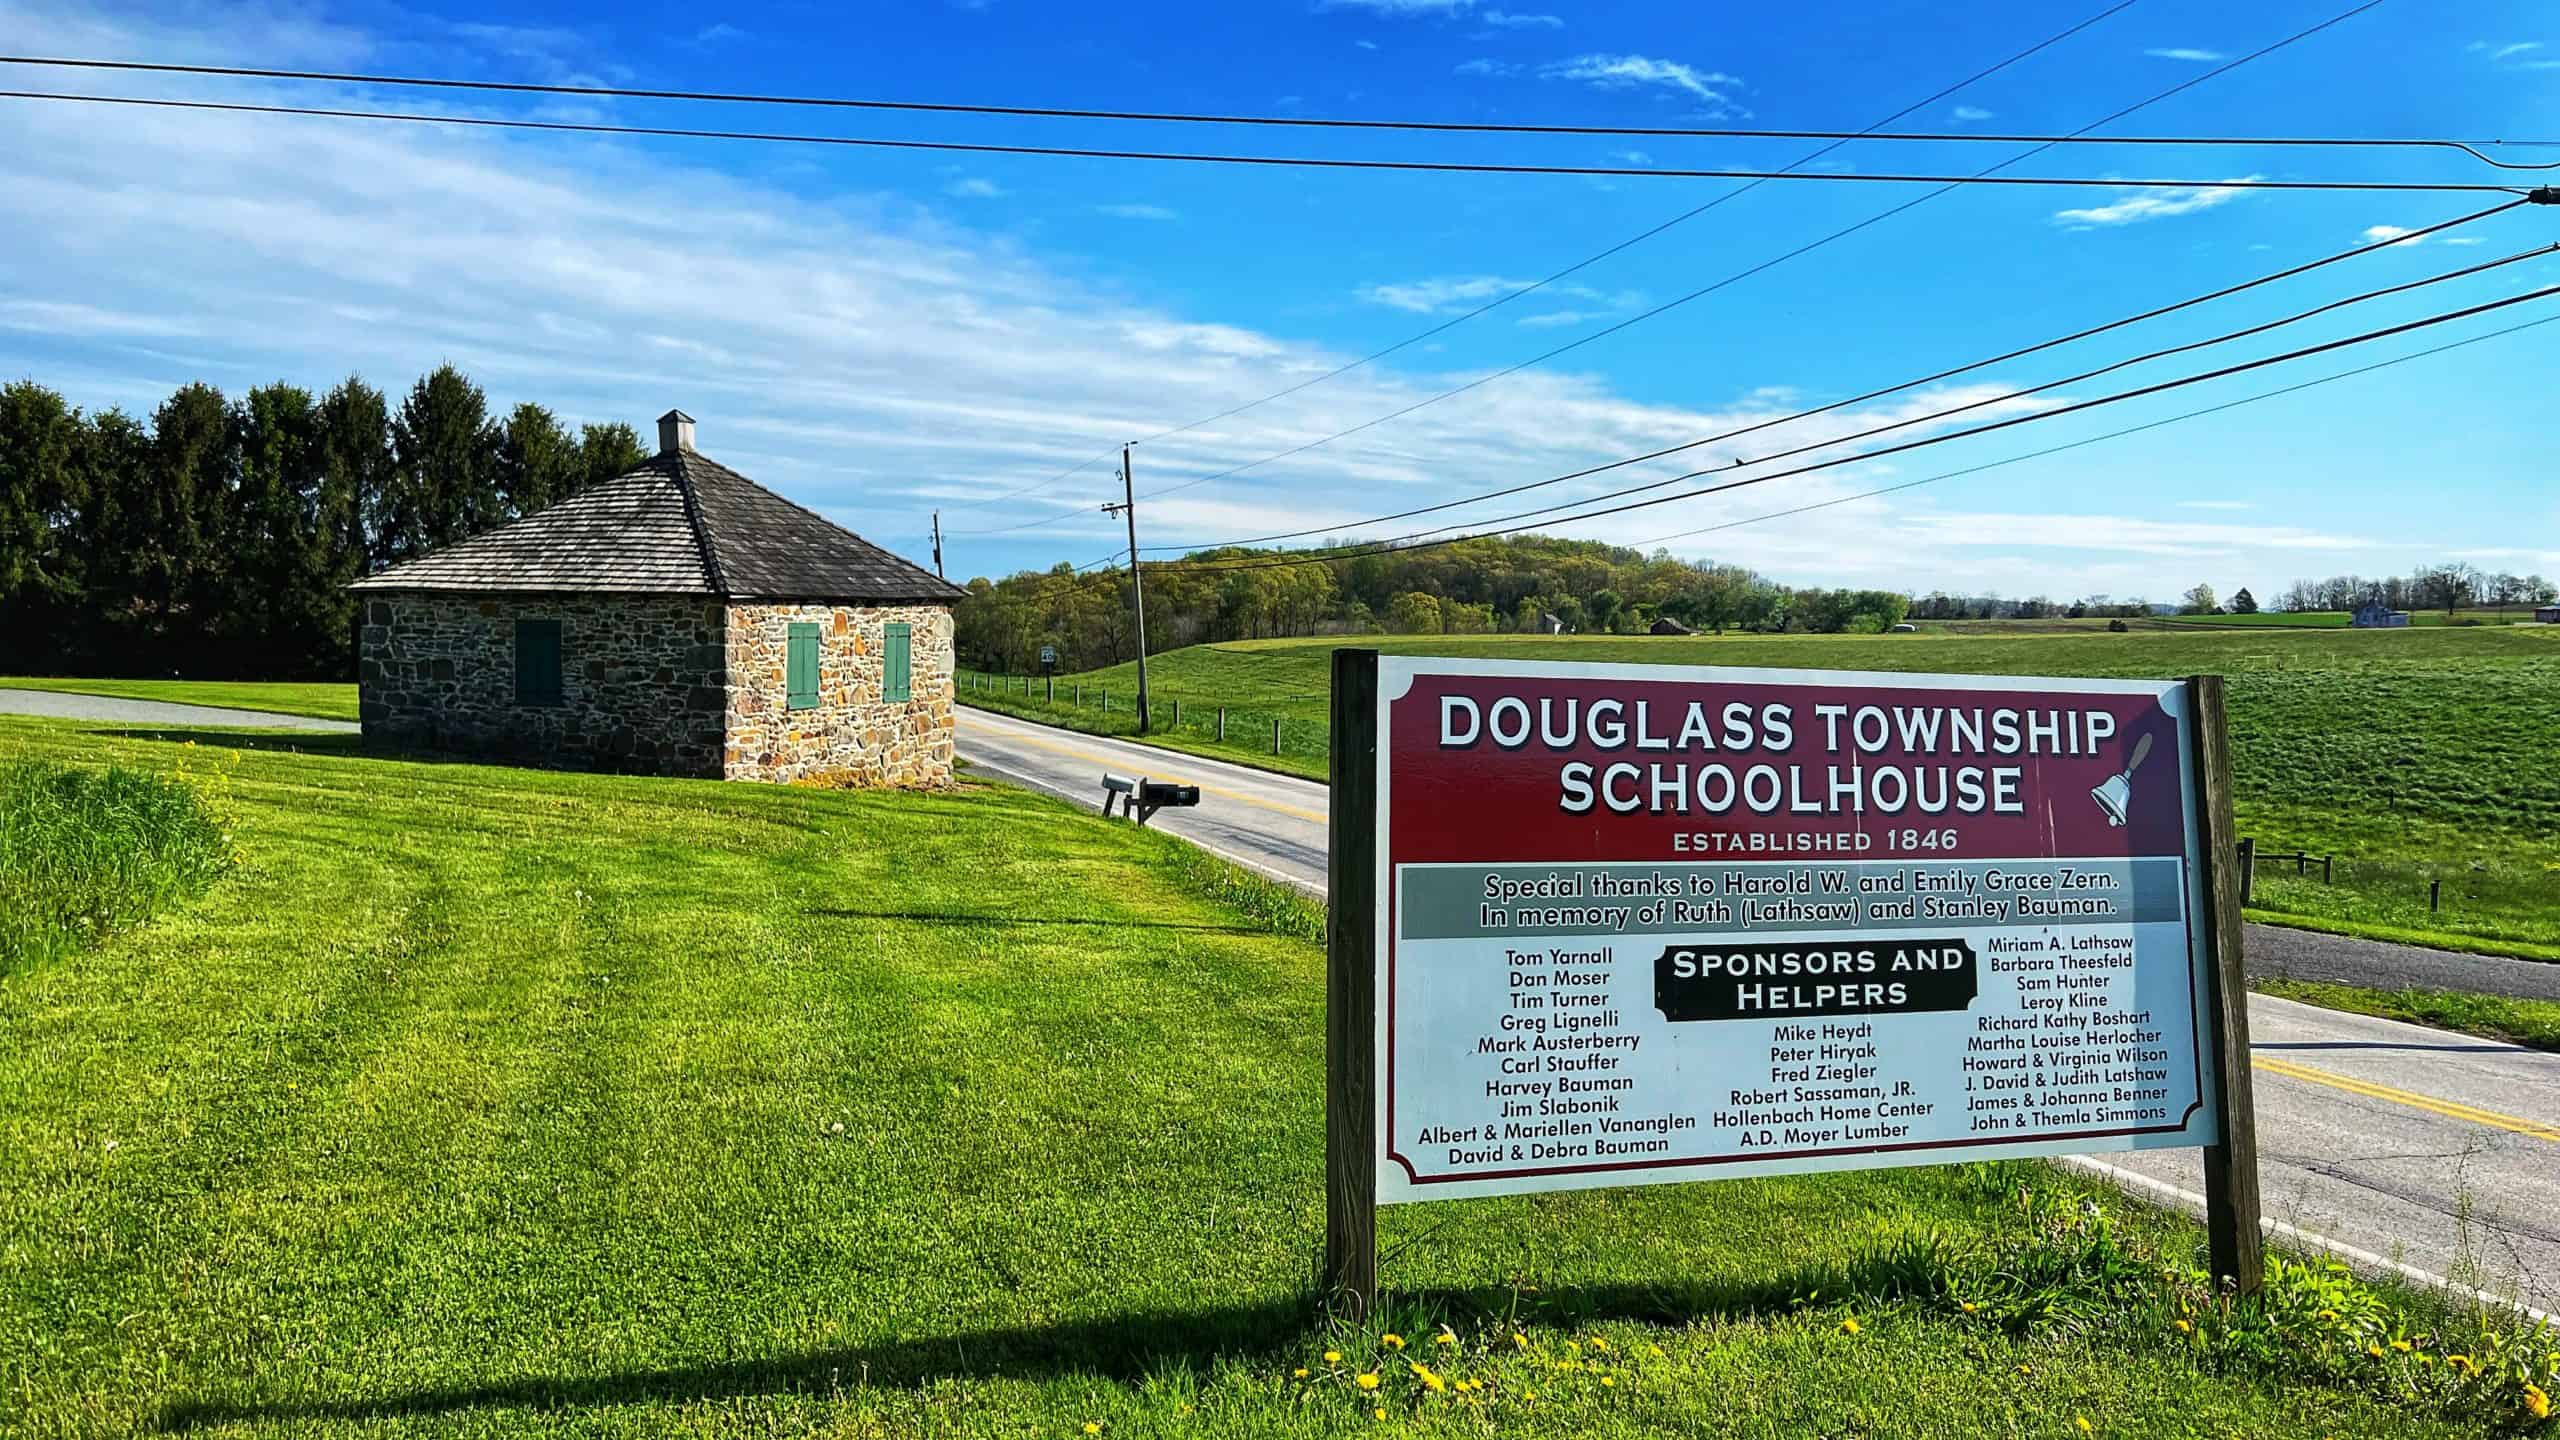 Douglass Township Schoolhouse - 2